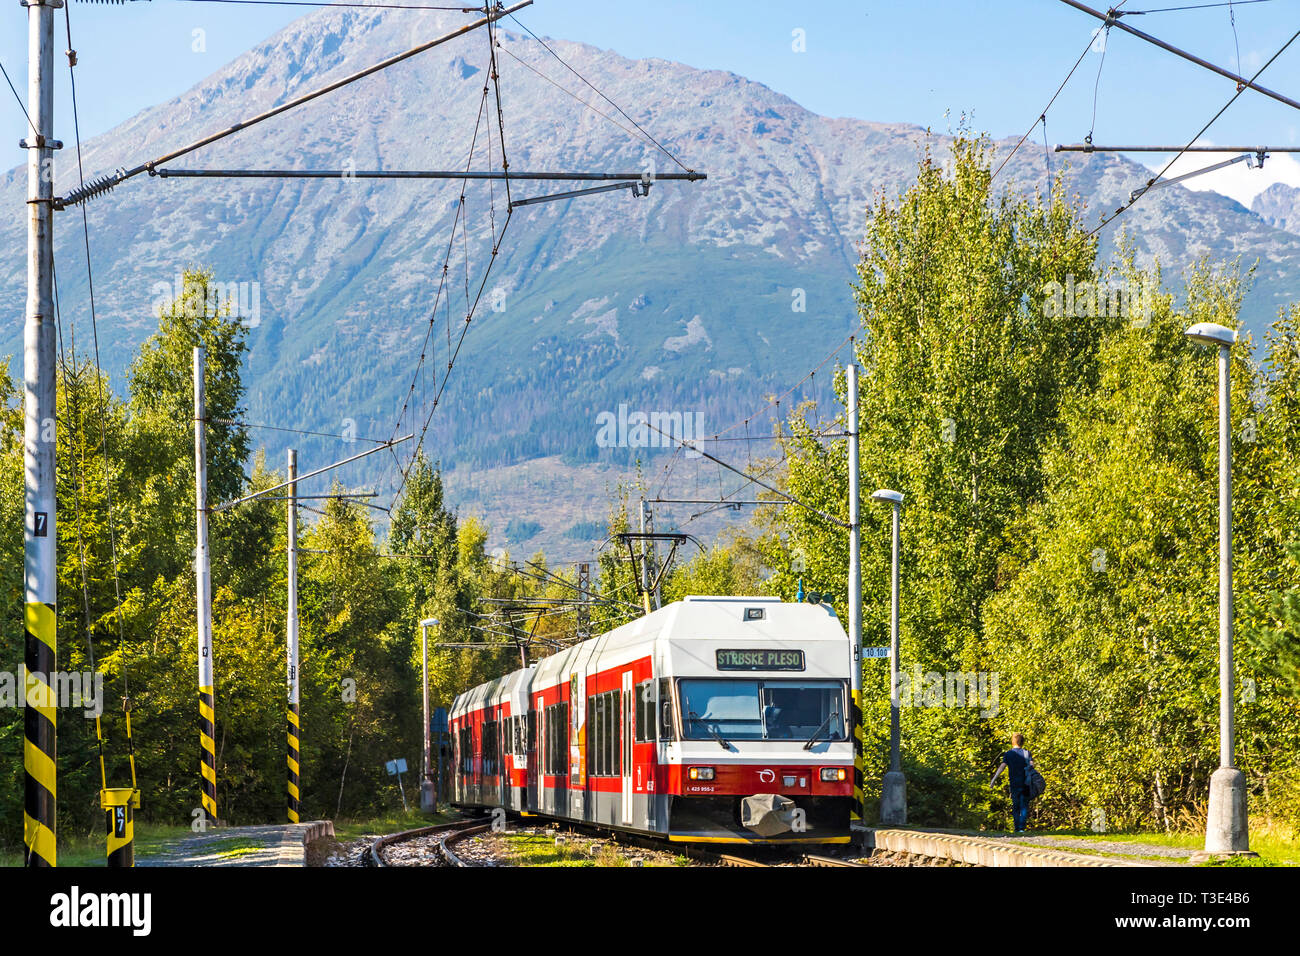 High Tatras, Slovakia - September 19, 2018: Tatra Electric Railways (TEZ-TER) train (also known as "Tatra tram") arrives to Pod Lesom station in High  Stock Photo